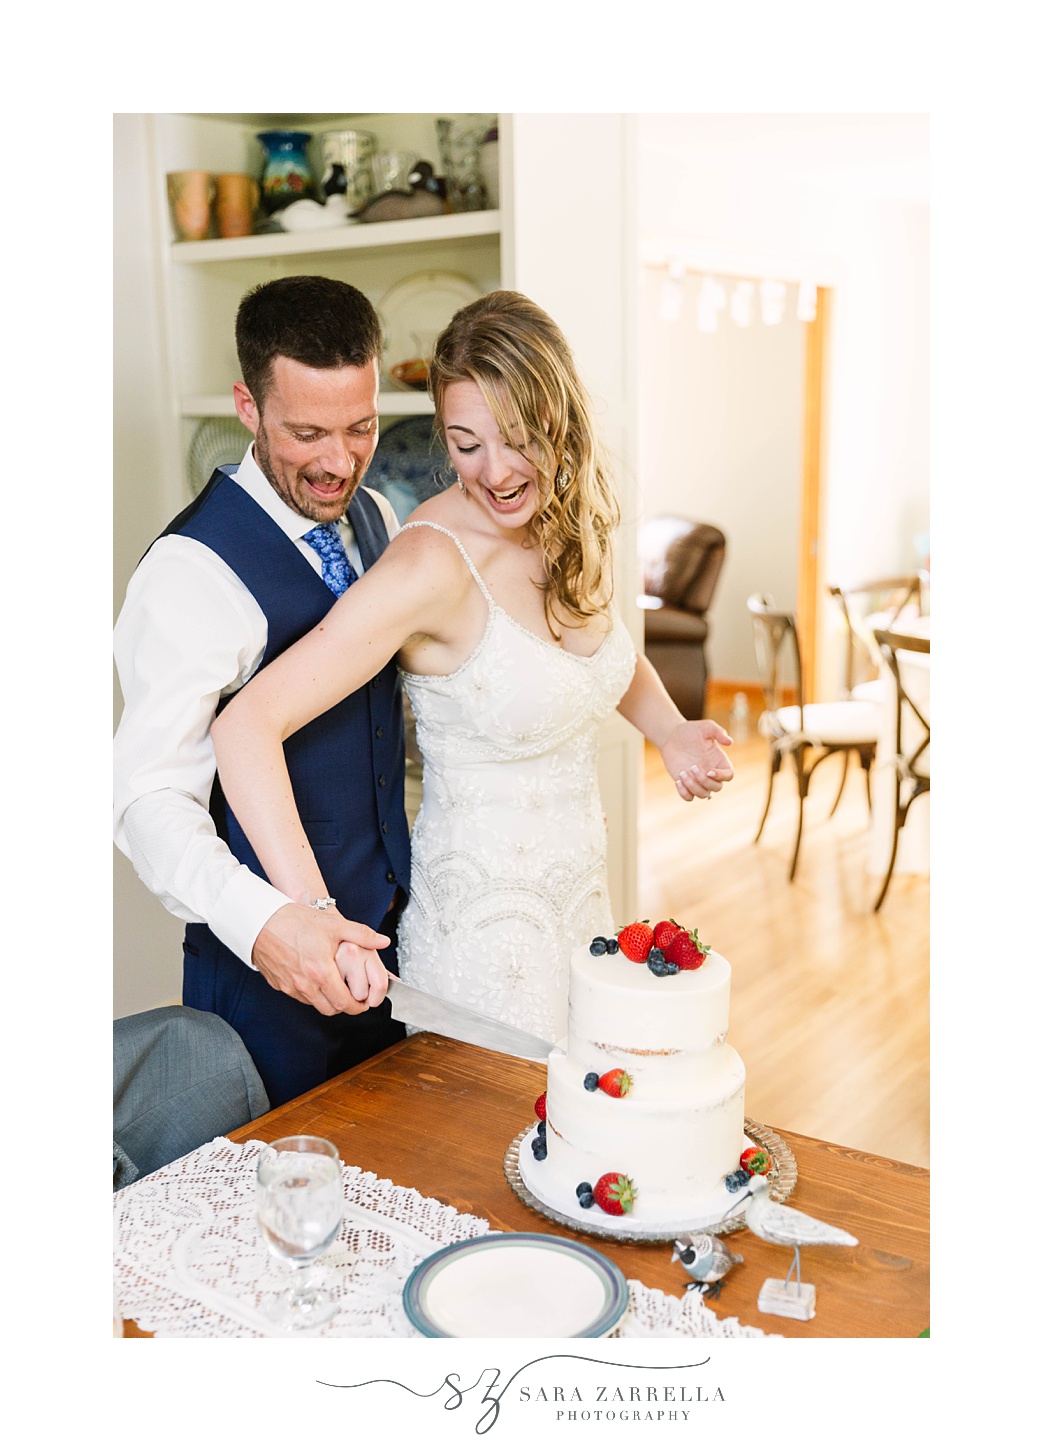 bride and groom cut wedding cake during  intimate backyard wedding reception 